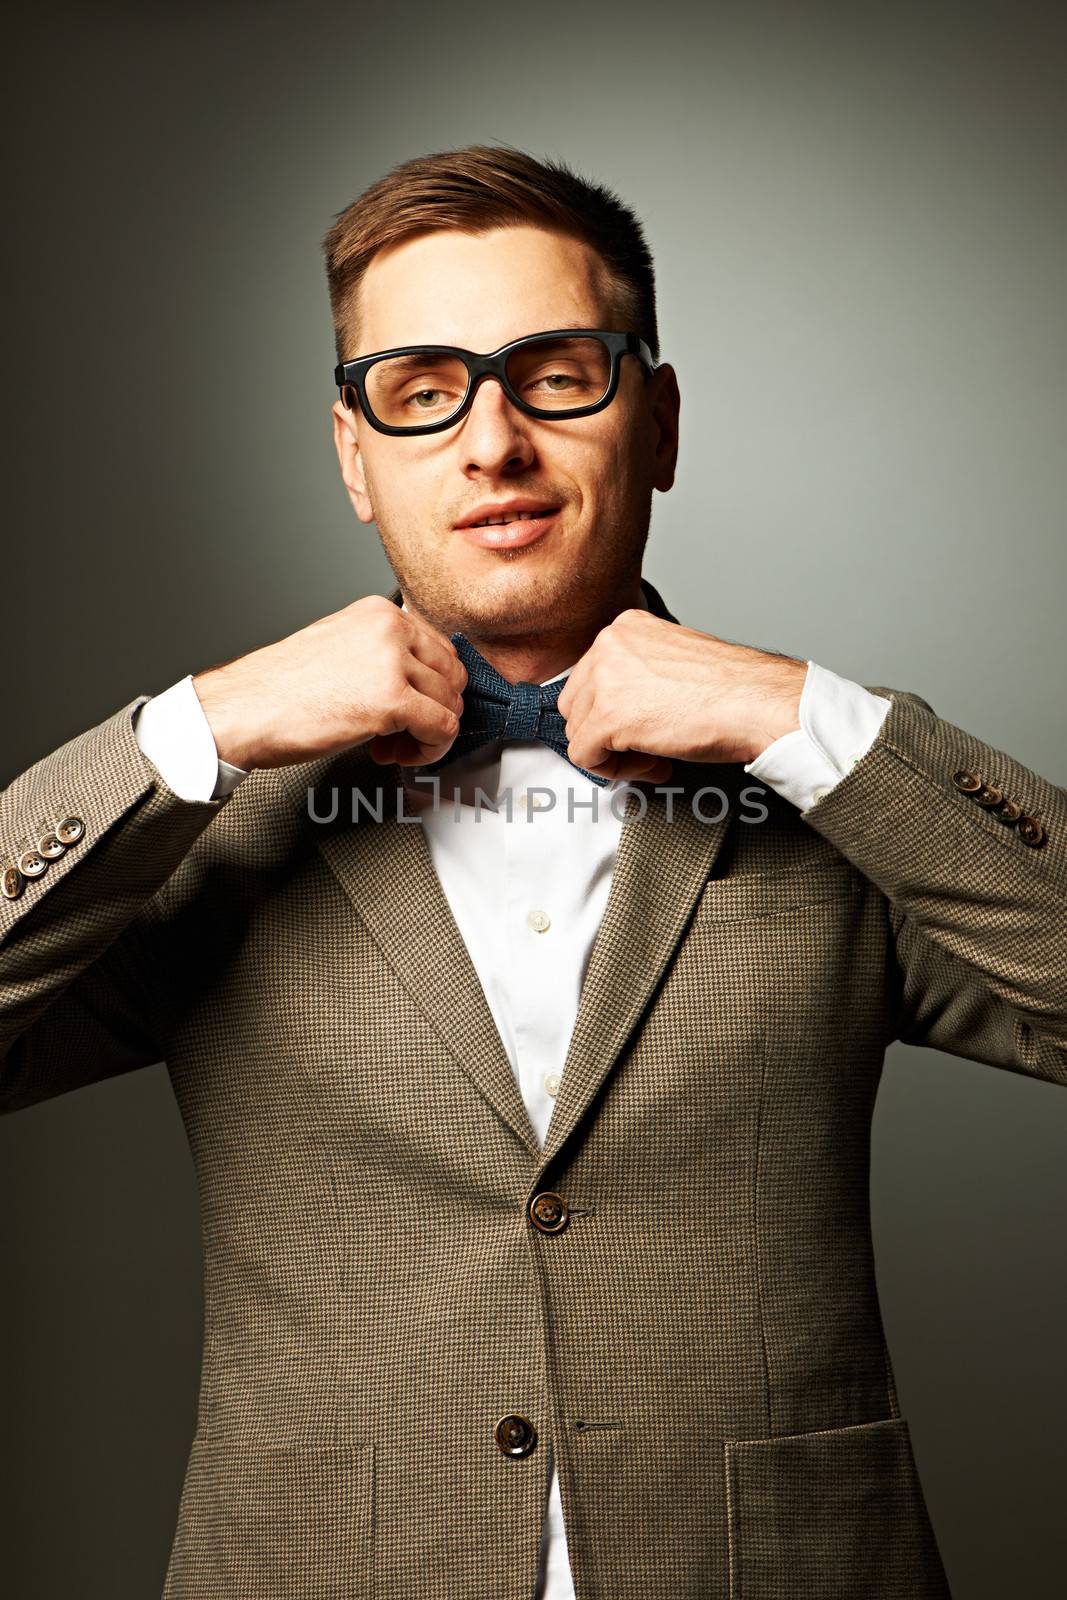 Confident nerd in eyeglasses adjusting his bow-tie by haveseen